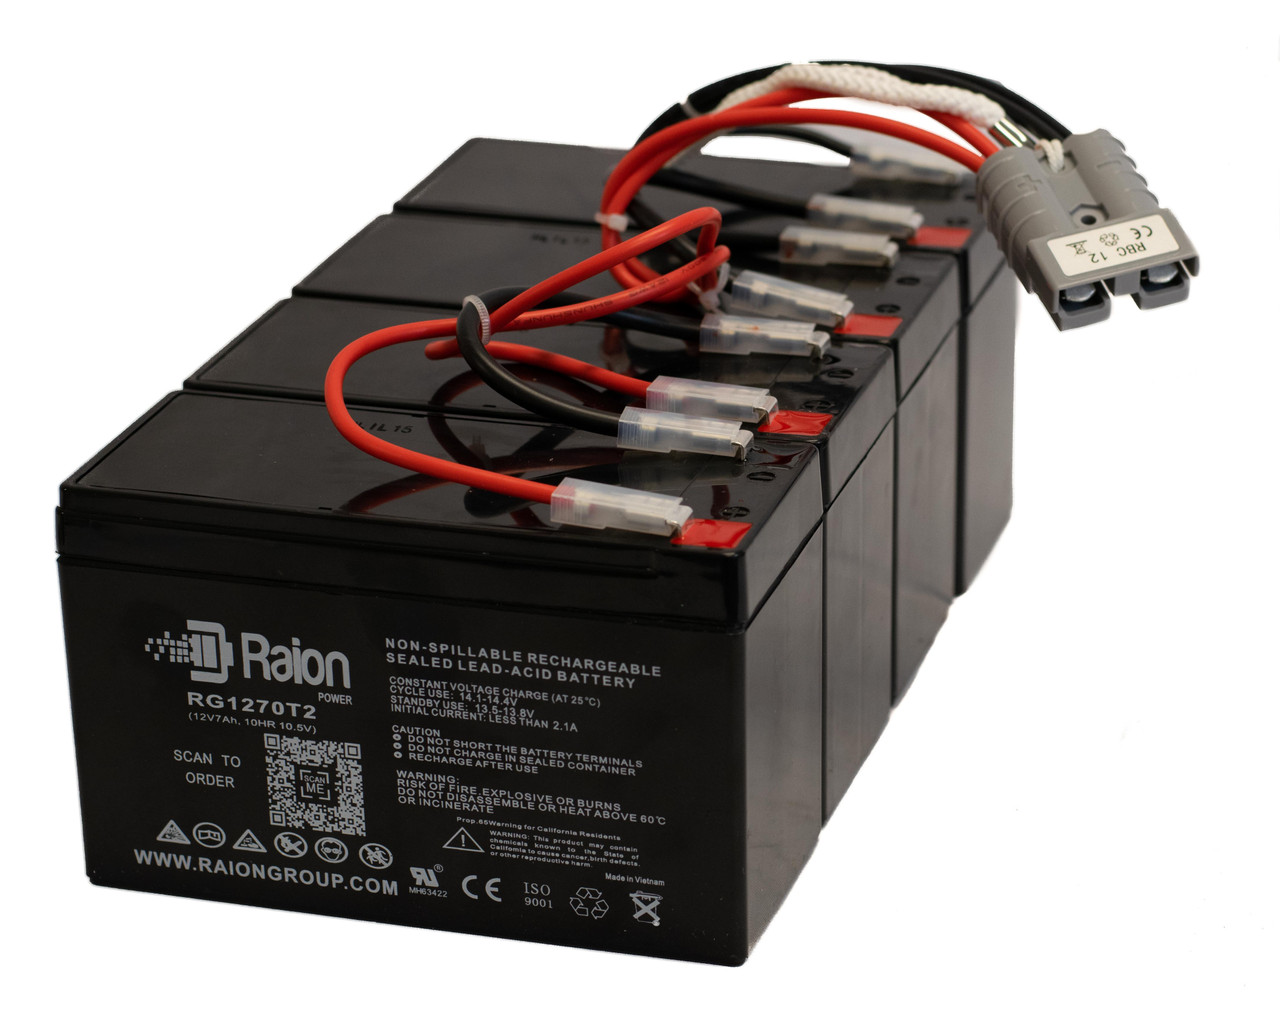 Raion Power Replacement RG-RBC12 Battery Kit for APC RBC12